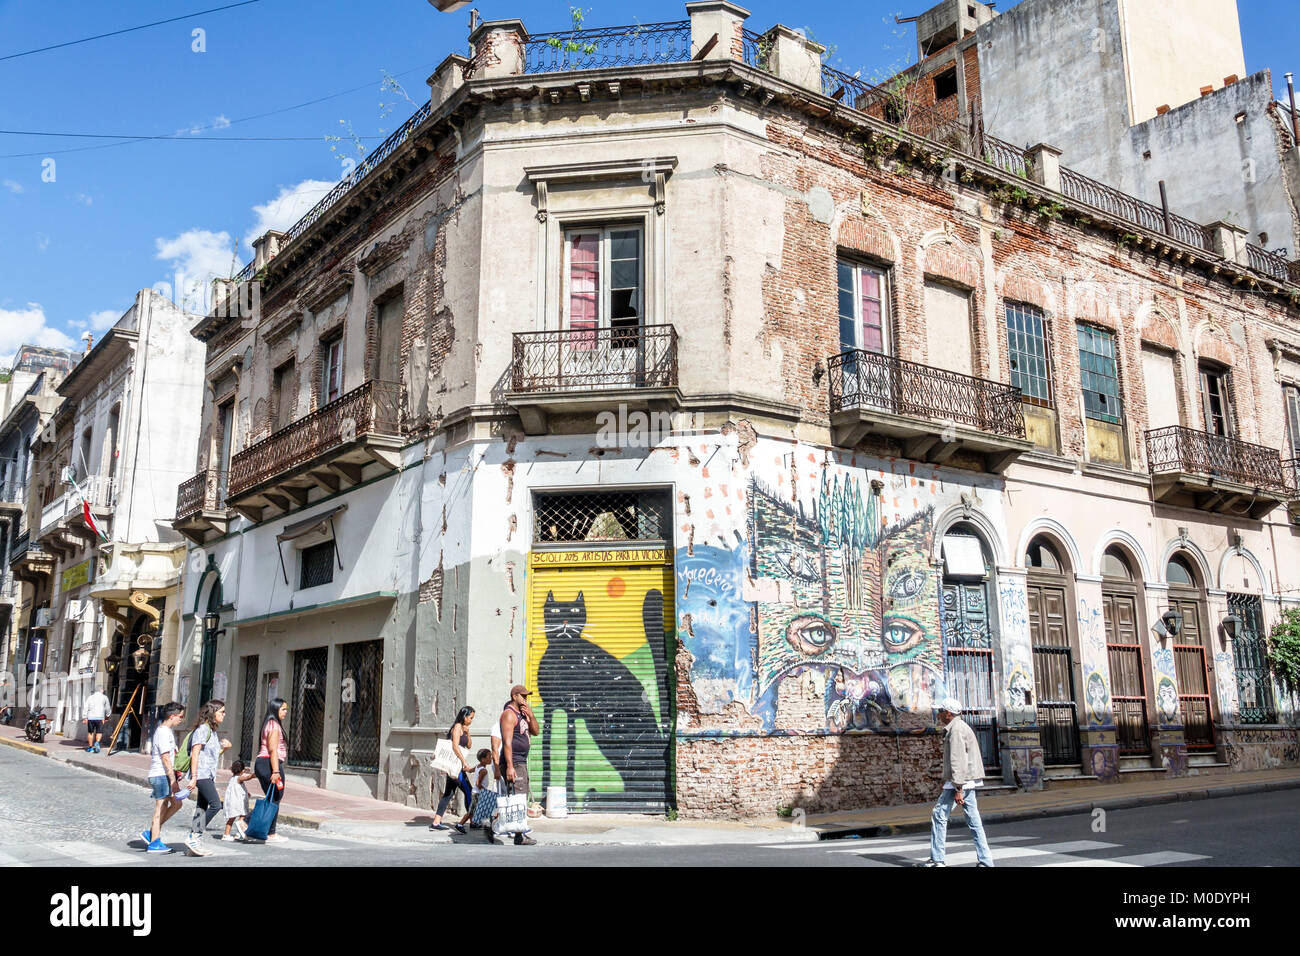 Buenos Aires Argentina,San Telmo,historic center,building,dilapidated,mural,street art,graffiti,corner,pedestrian,Black cat,Hispanic ARG171119334 Stock Photo